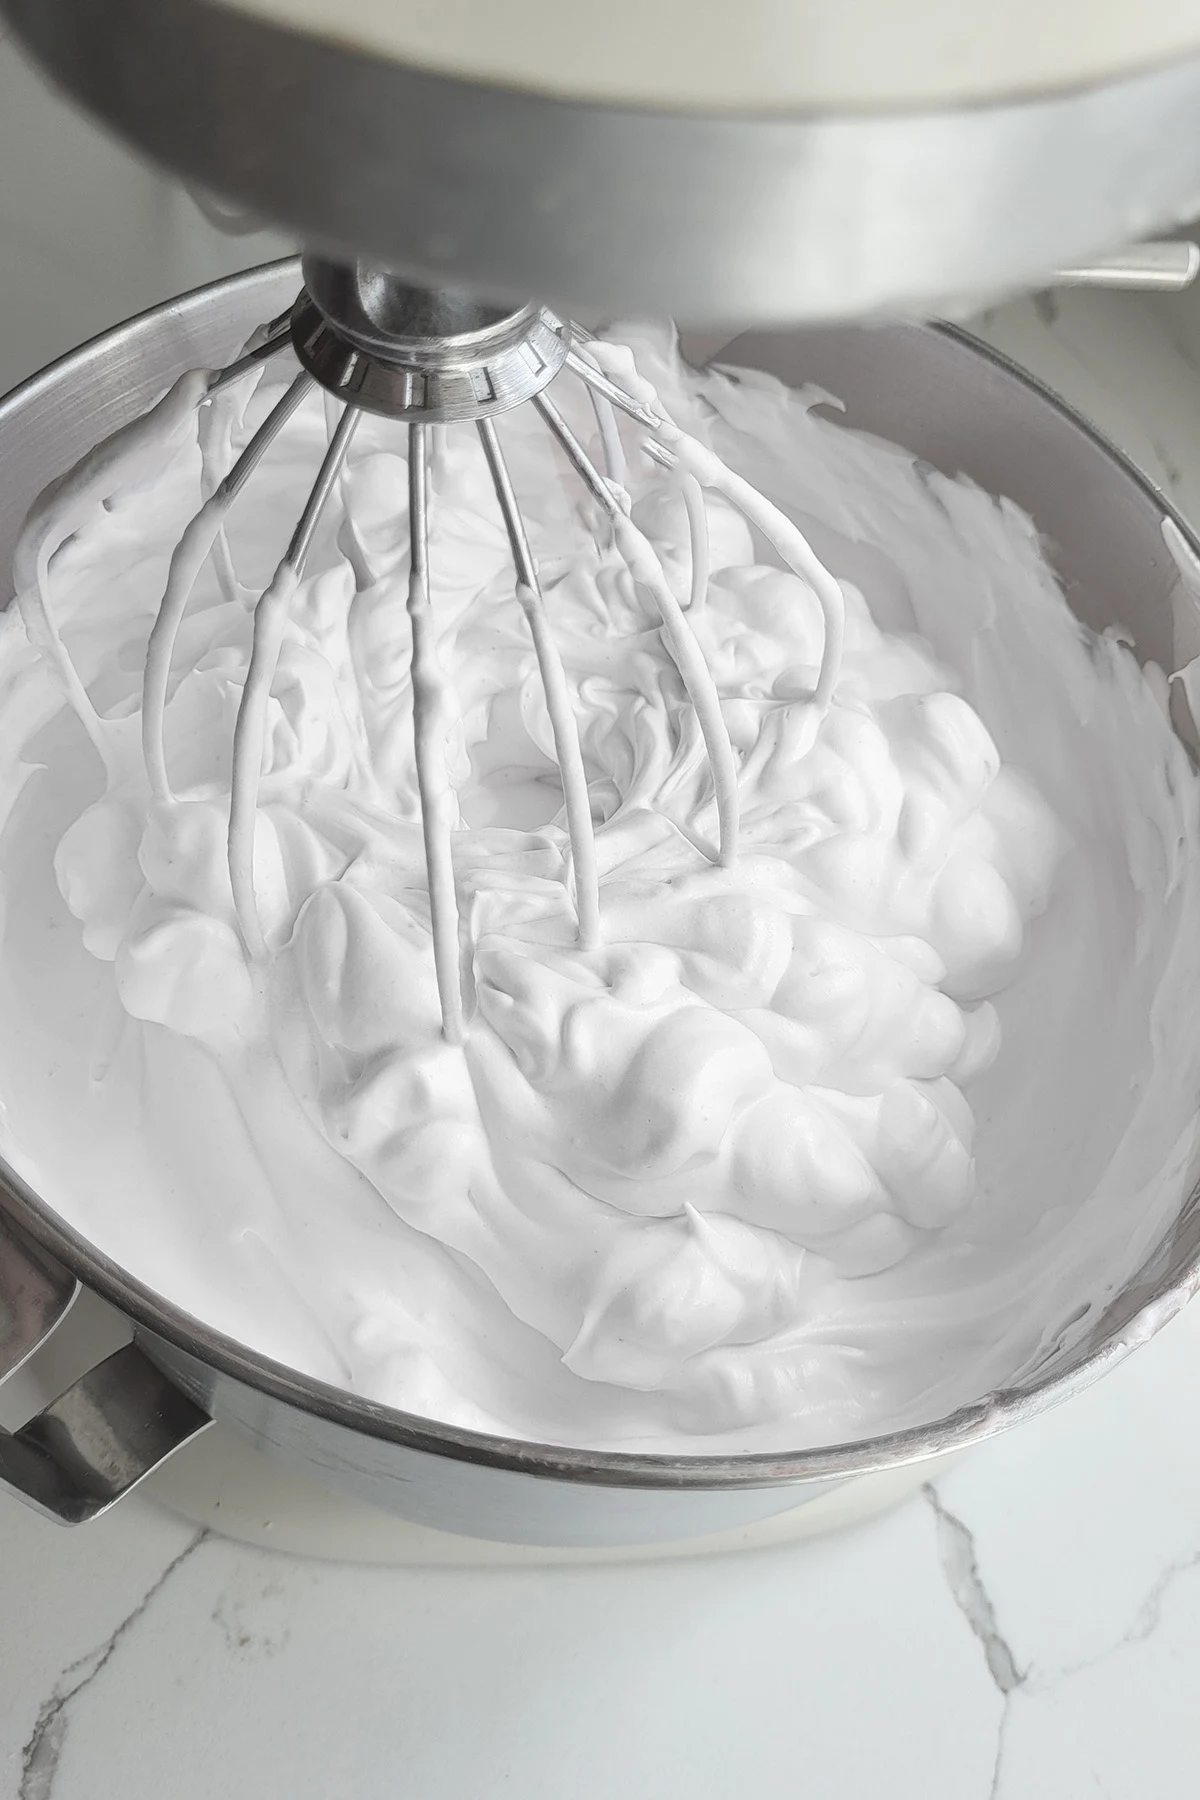 a bowl of whipped egg whites.